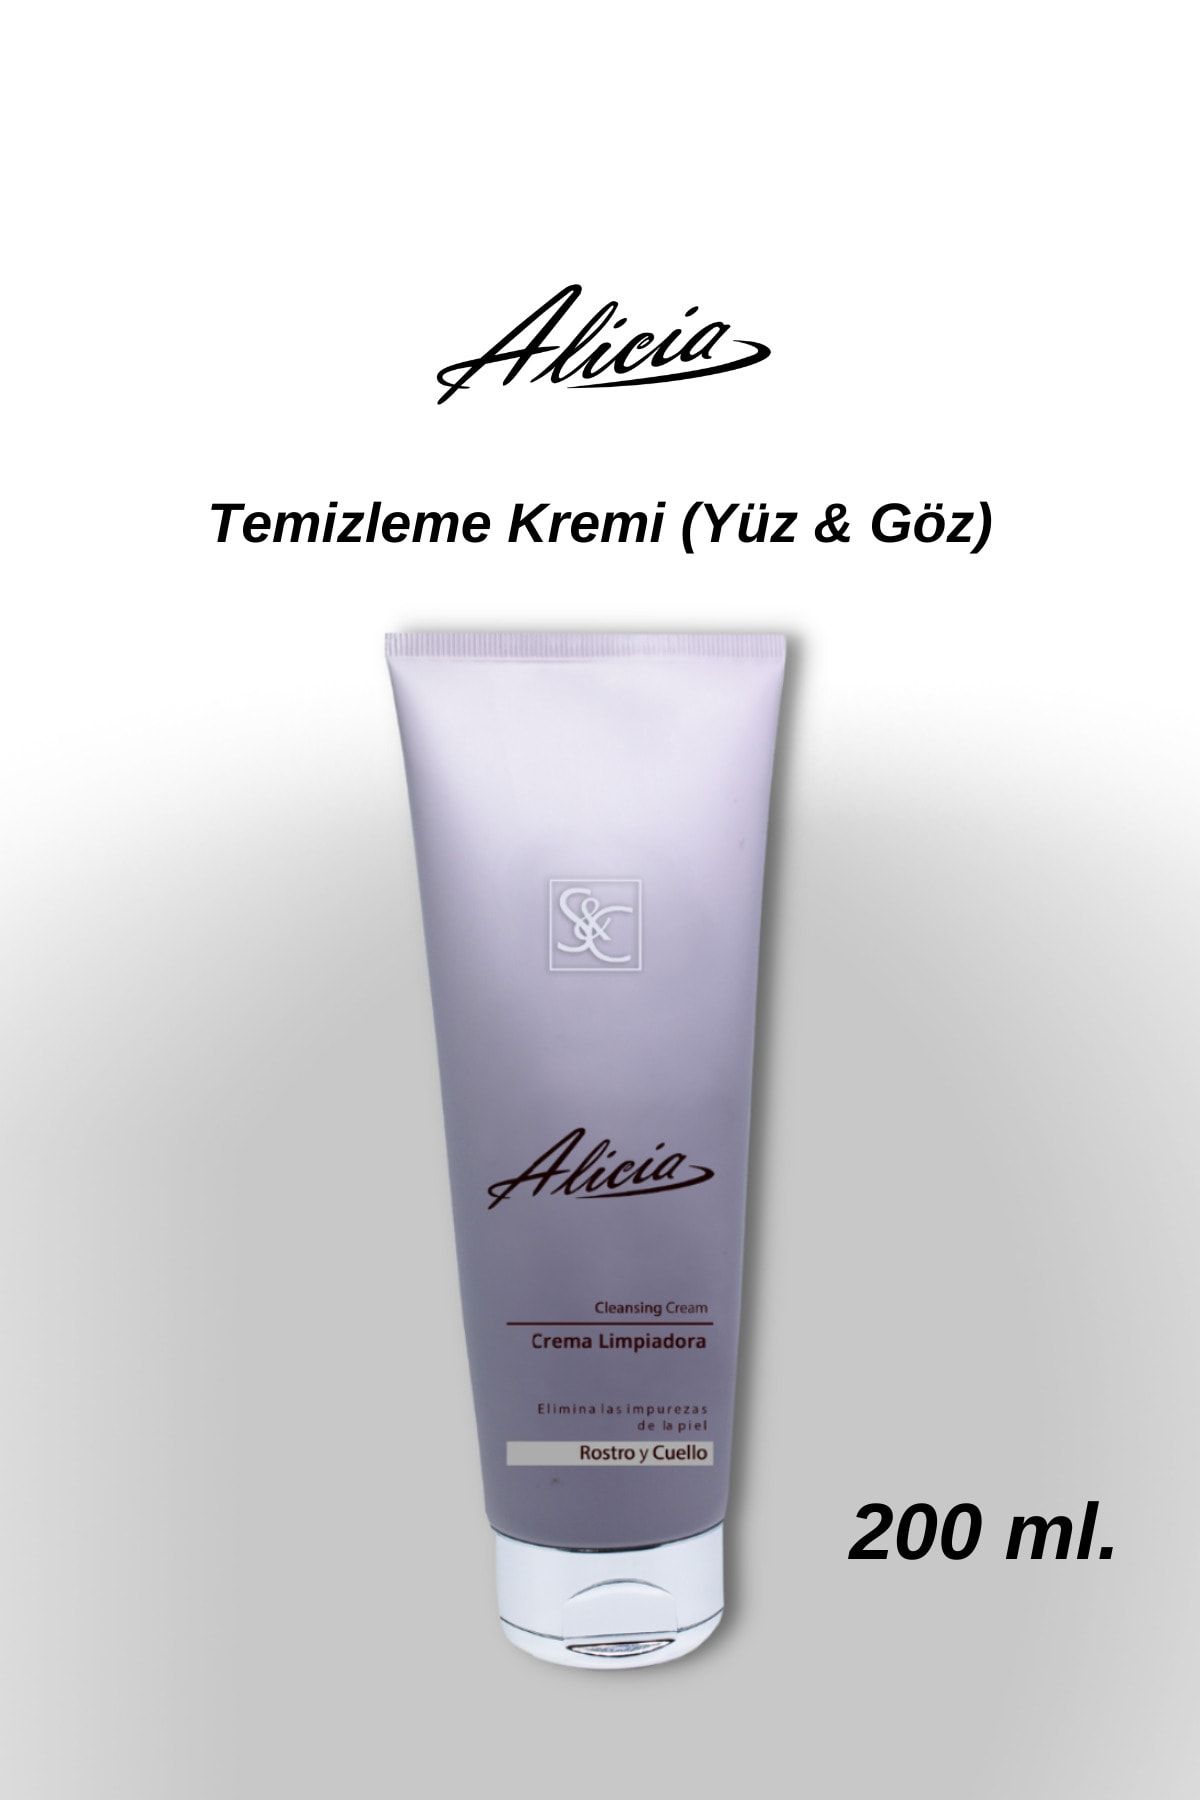 Alicia Temizleme Kremi (yüz & Göz) - Crema Limpiadora – Cilt Temizleme, Makyaj Temizleme